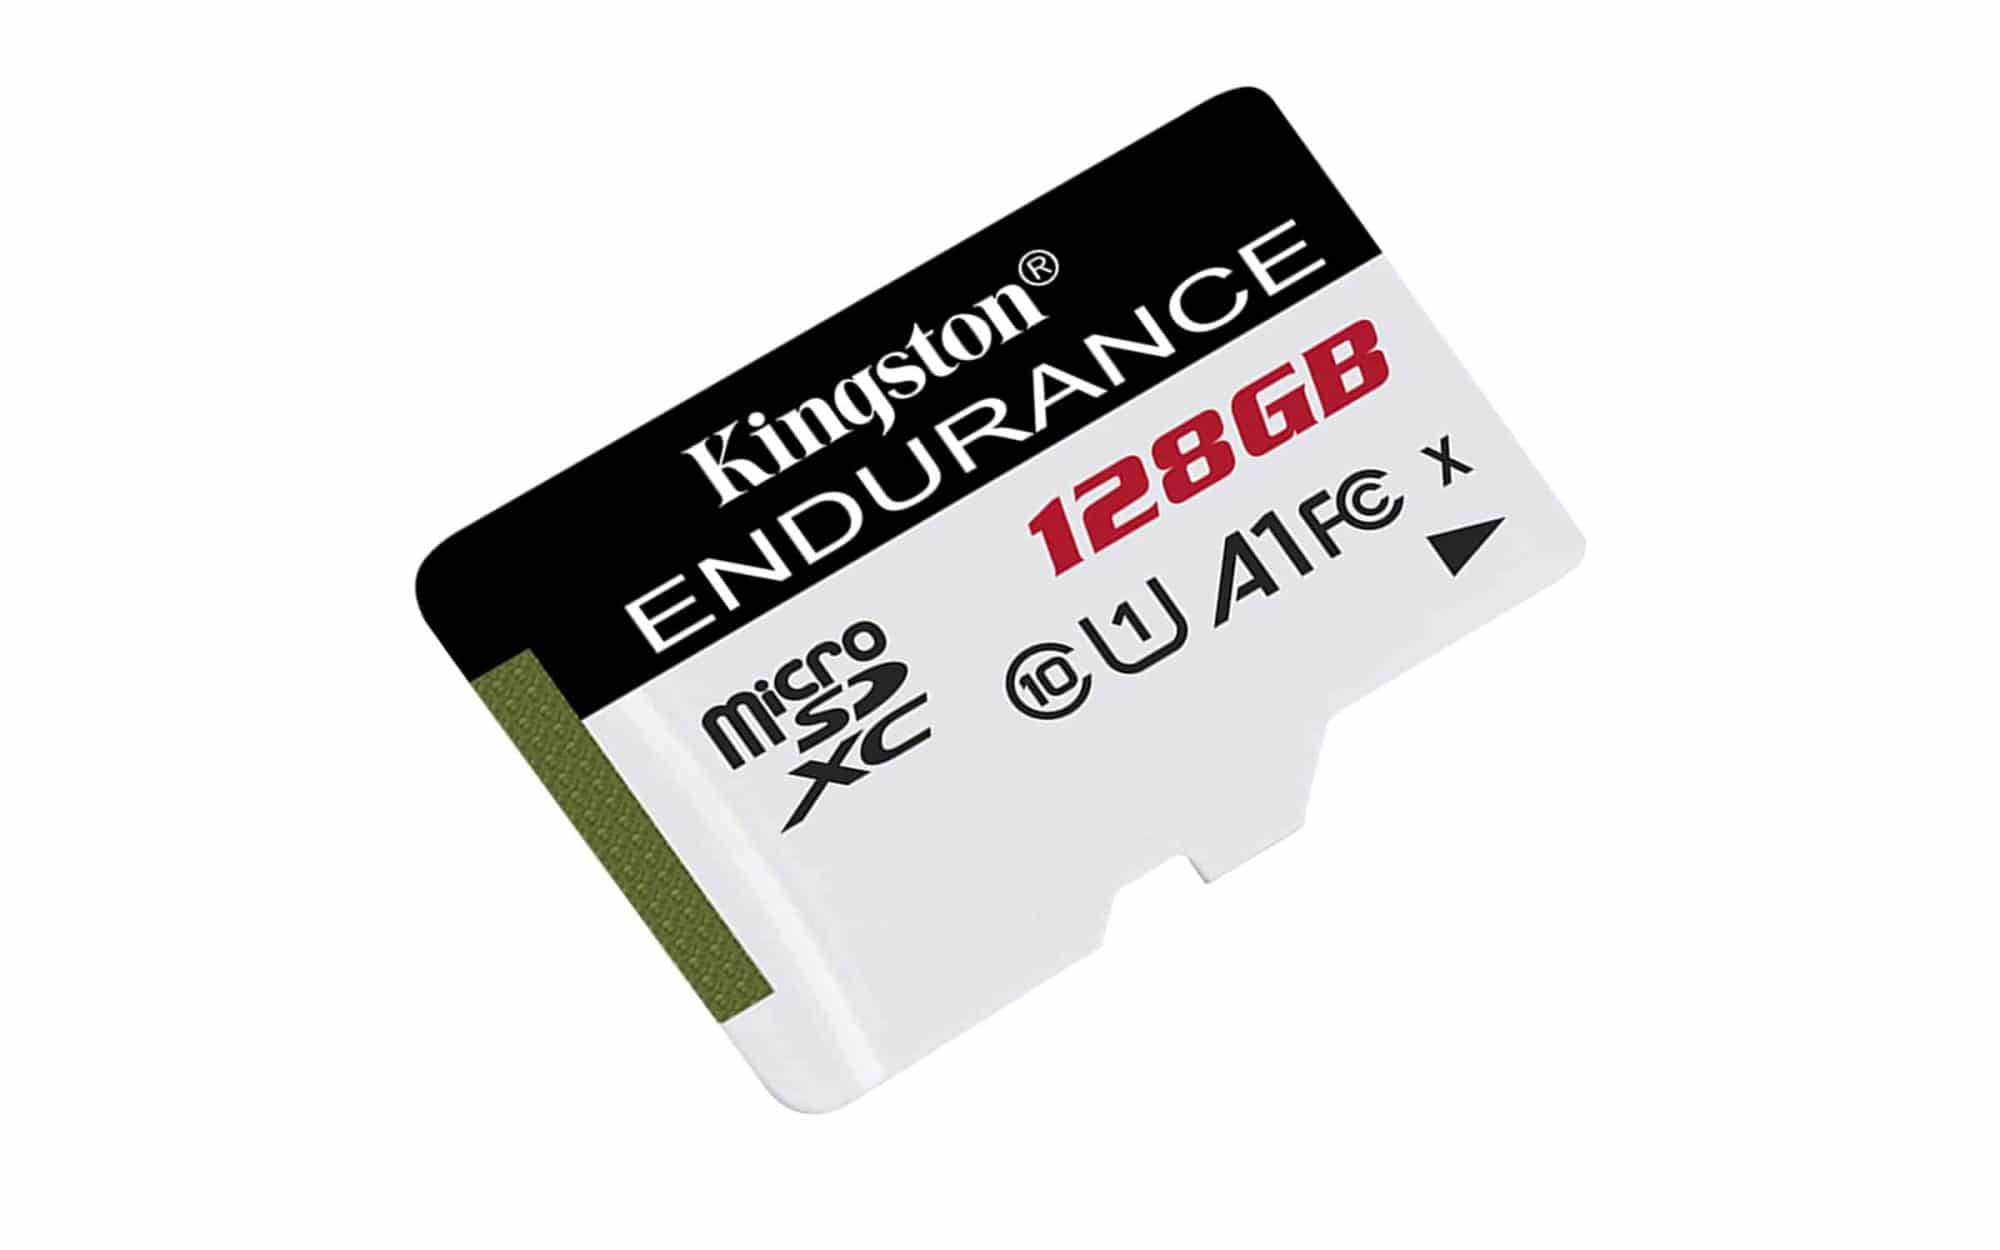 Kingston เปิดตัวการ์ด microSD รุ่นใหม่ในซีรีส์ High Endurance 1